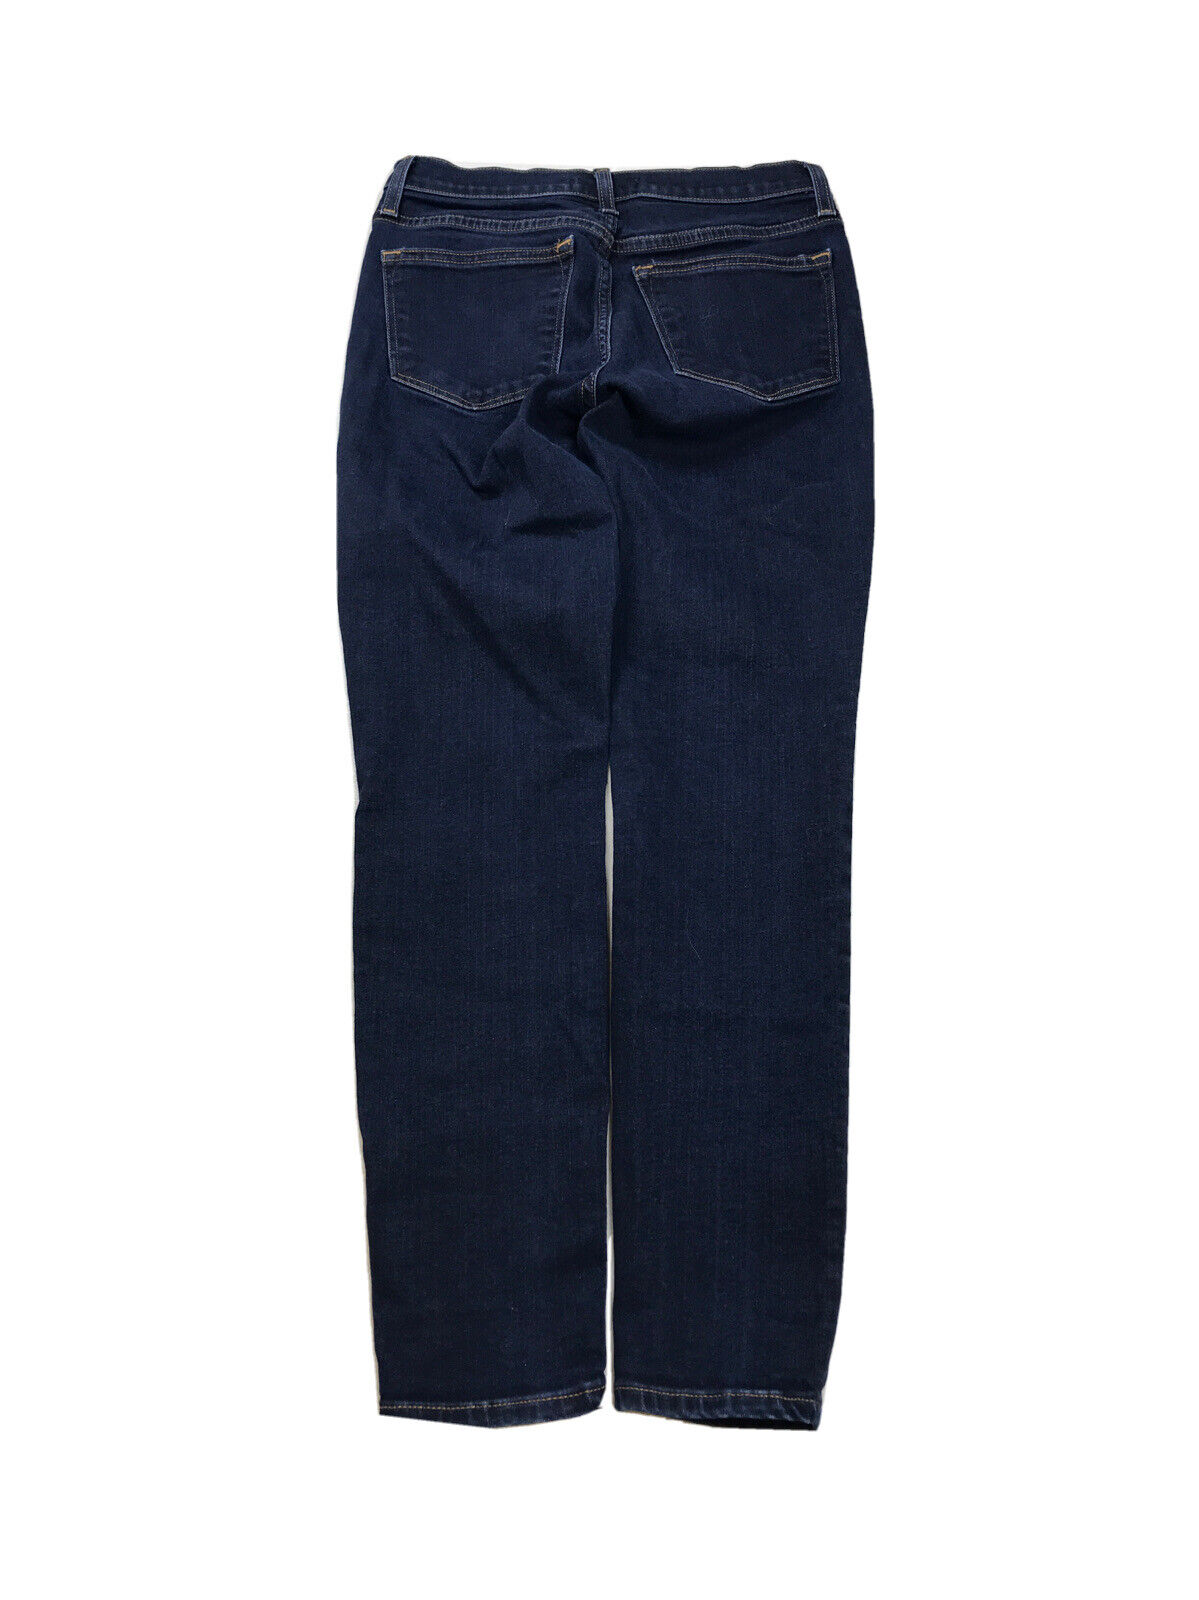 J. Crew Women's Dark Wash Stretch Mercantile Skinny Jeans - 26x28